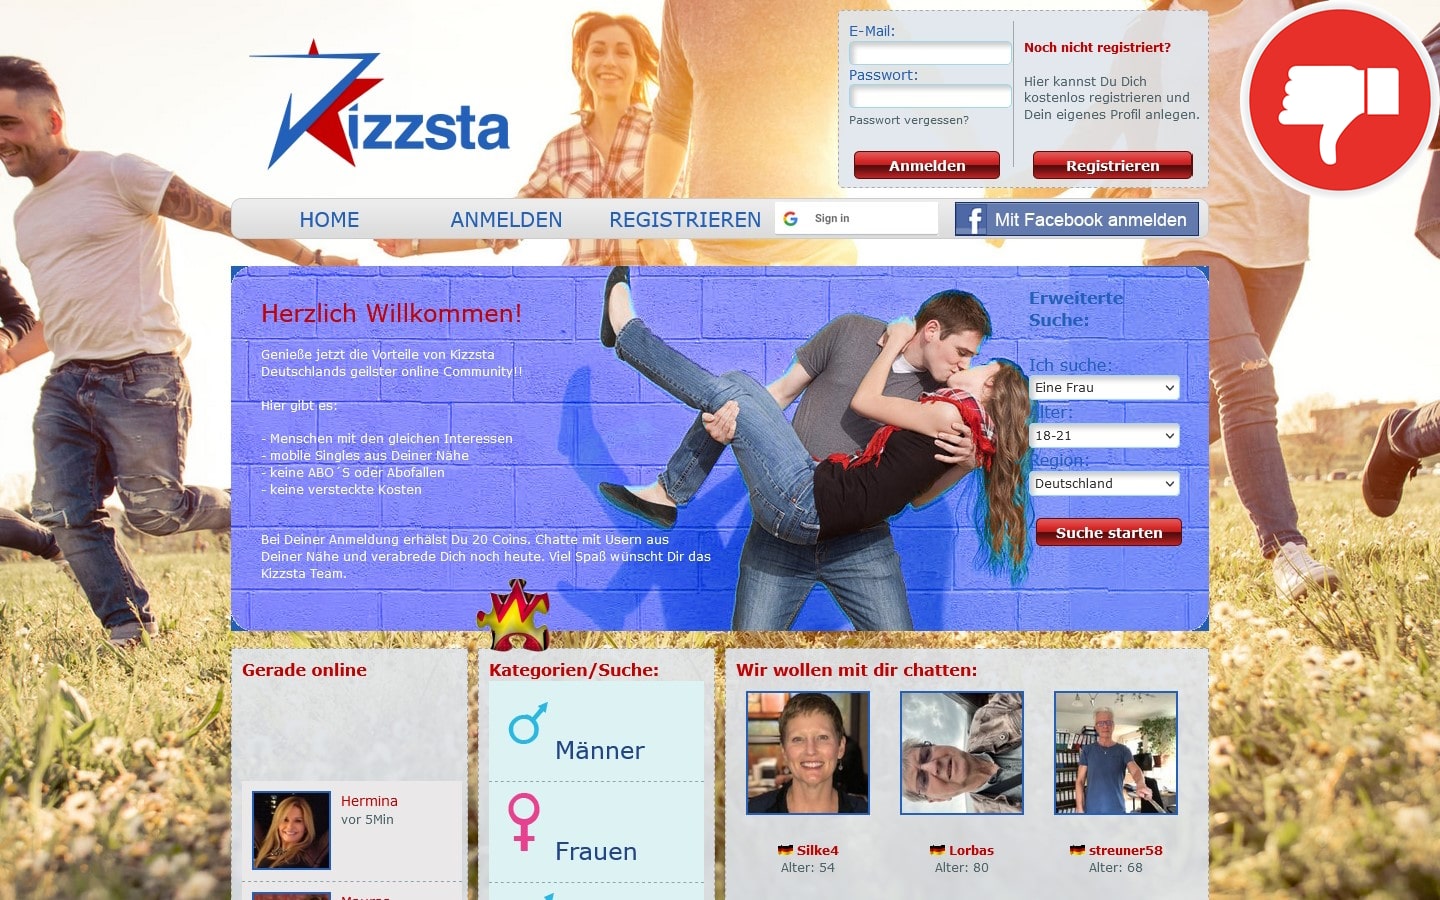 Testbericht Kizzsta.de Abzocke